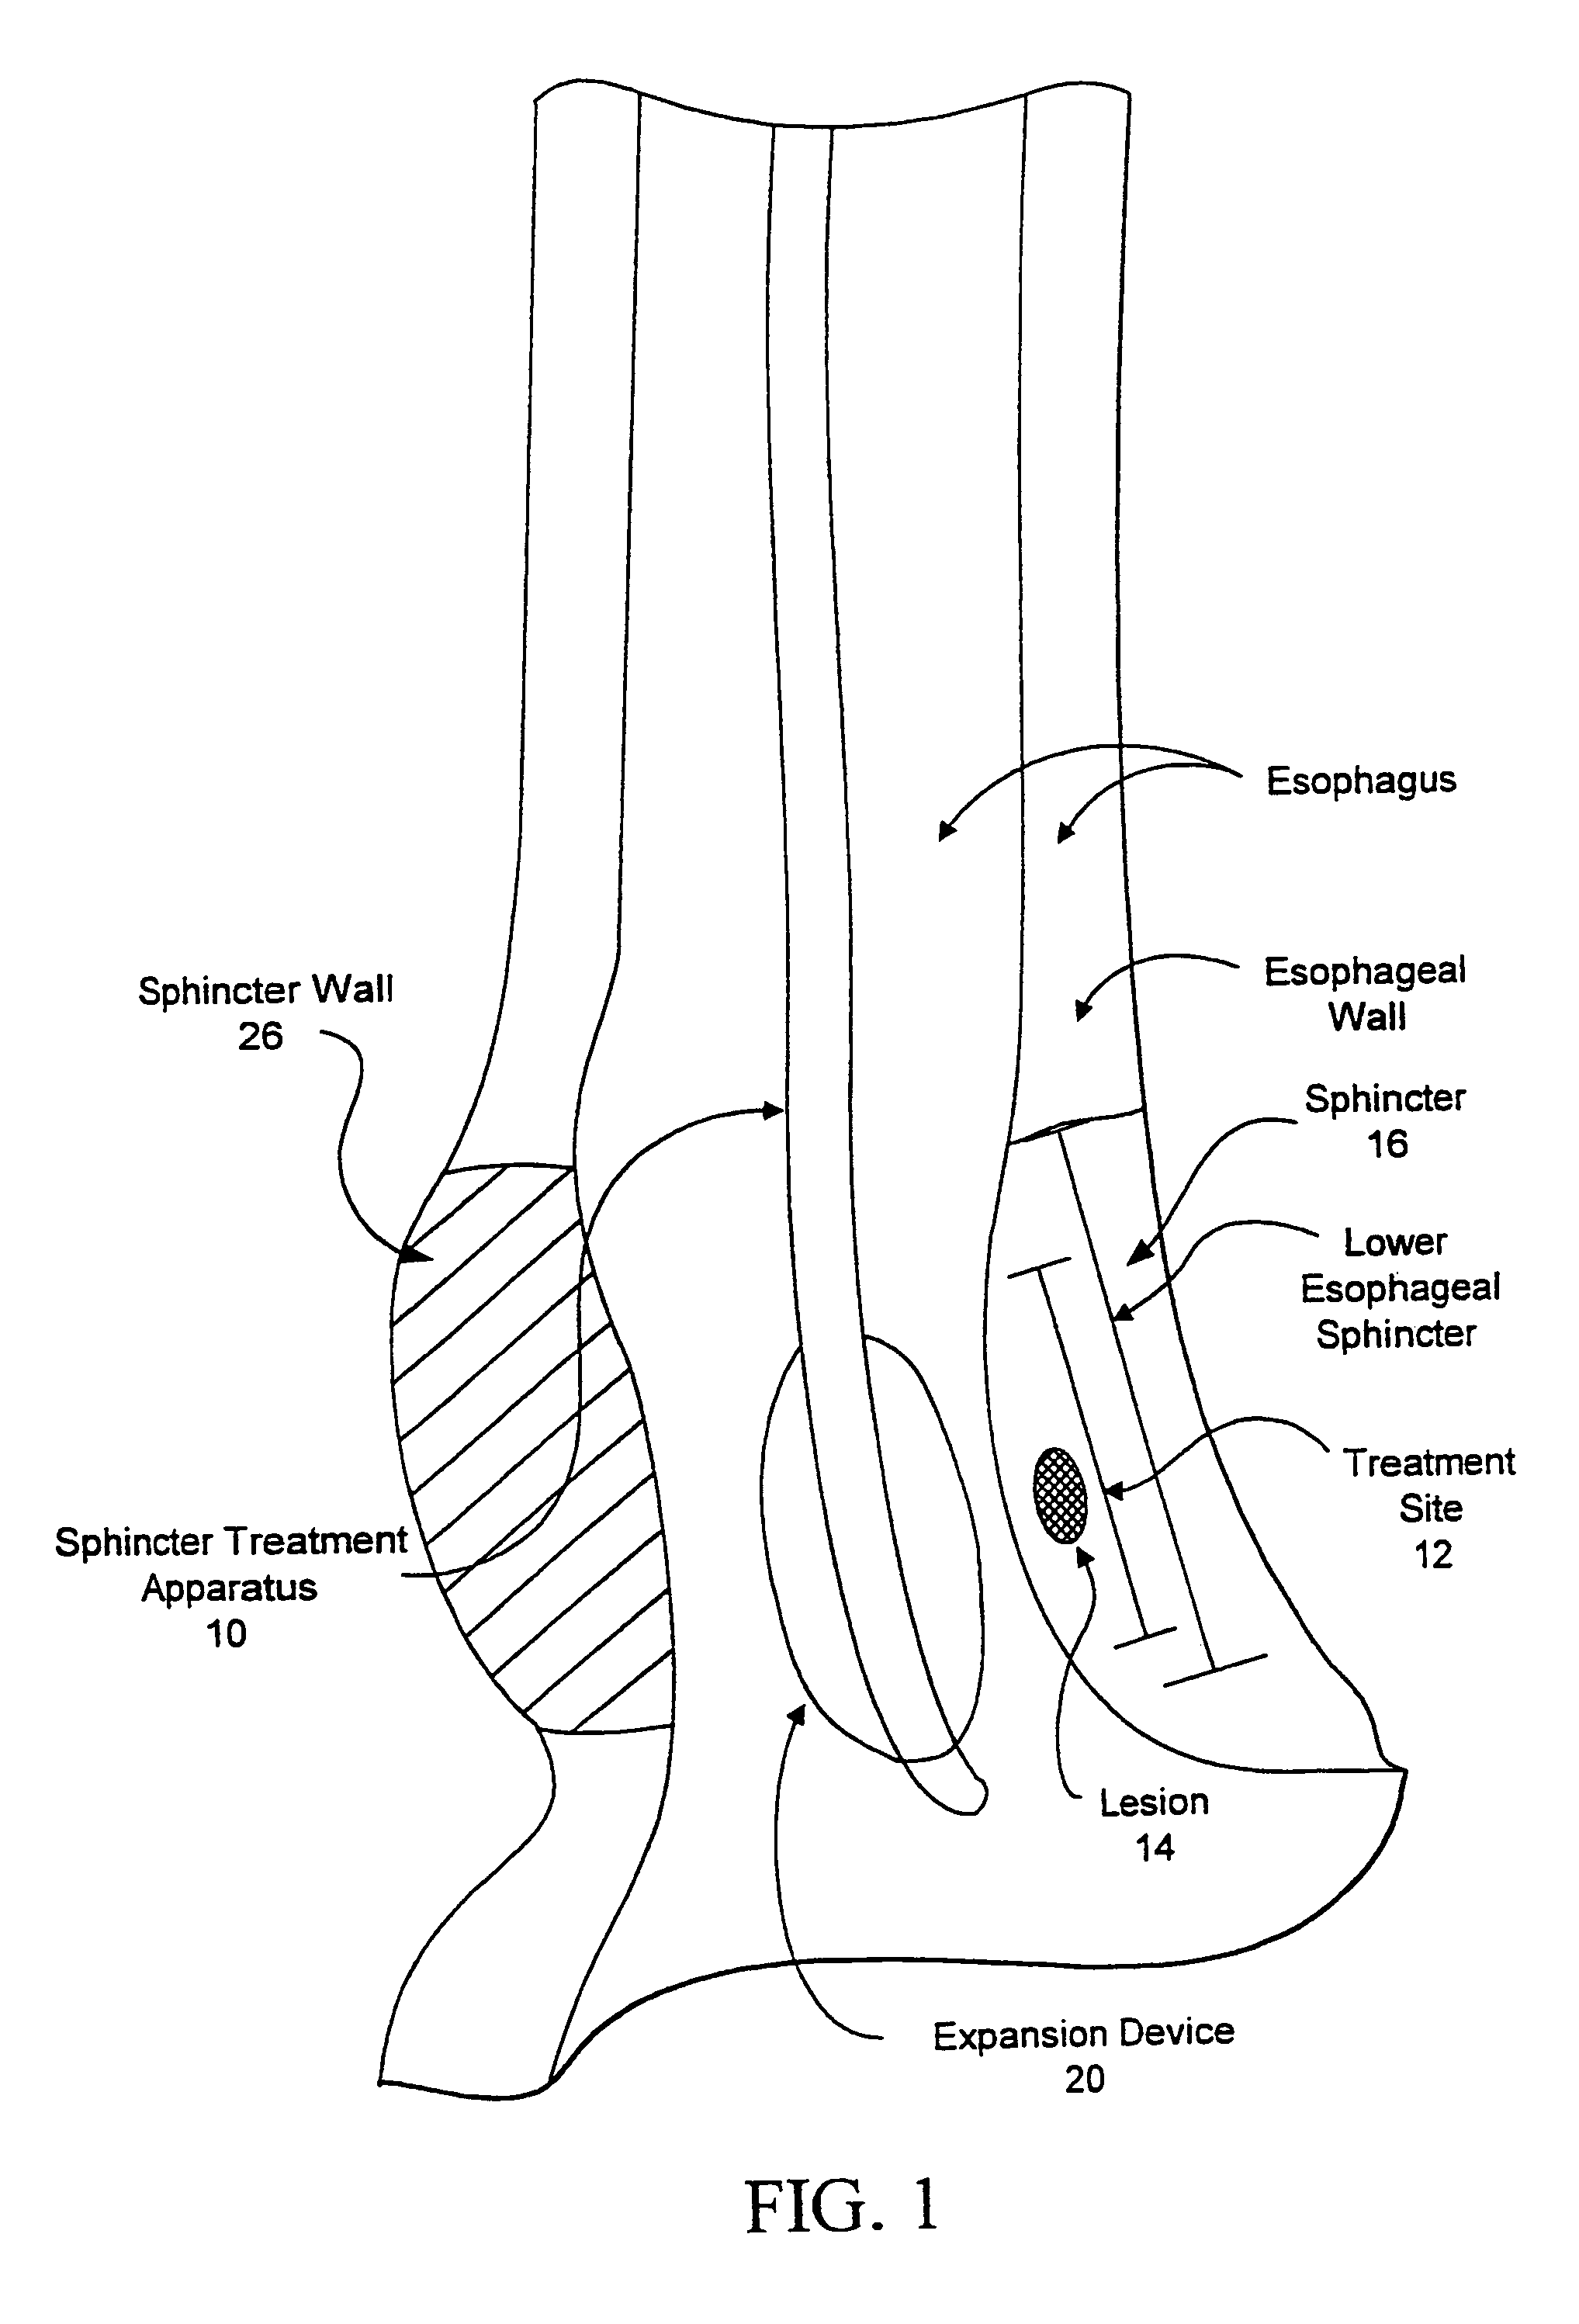 Sphincter treatment apparatus